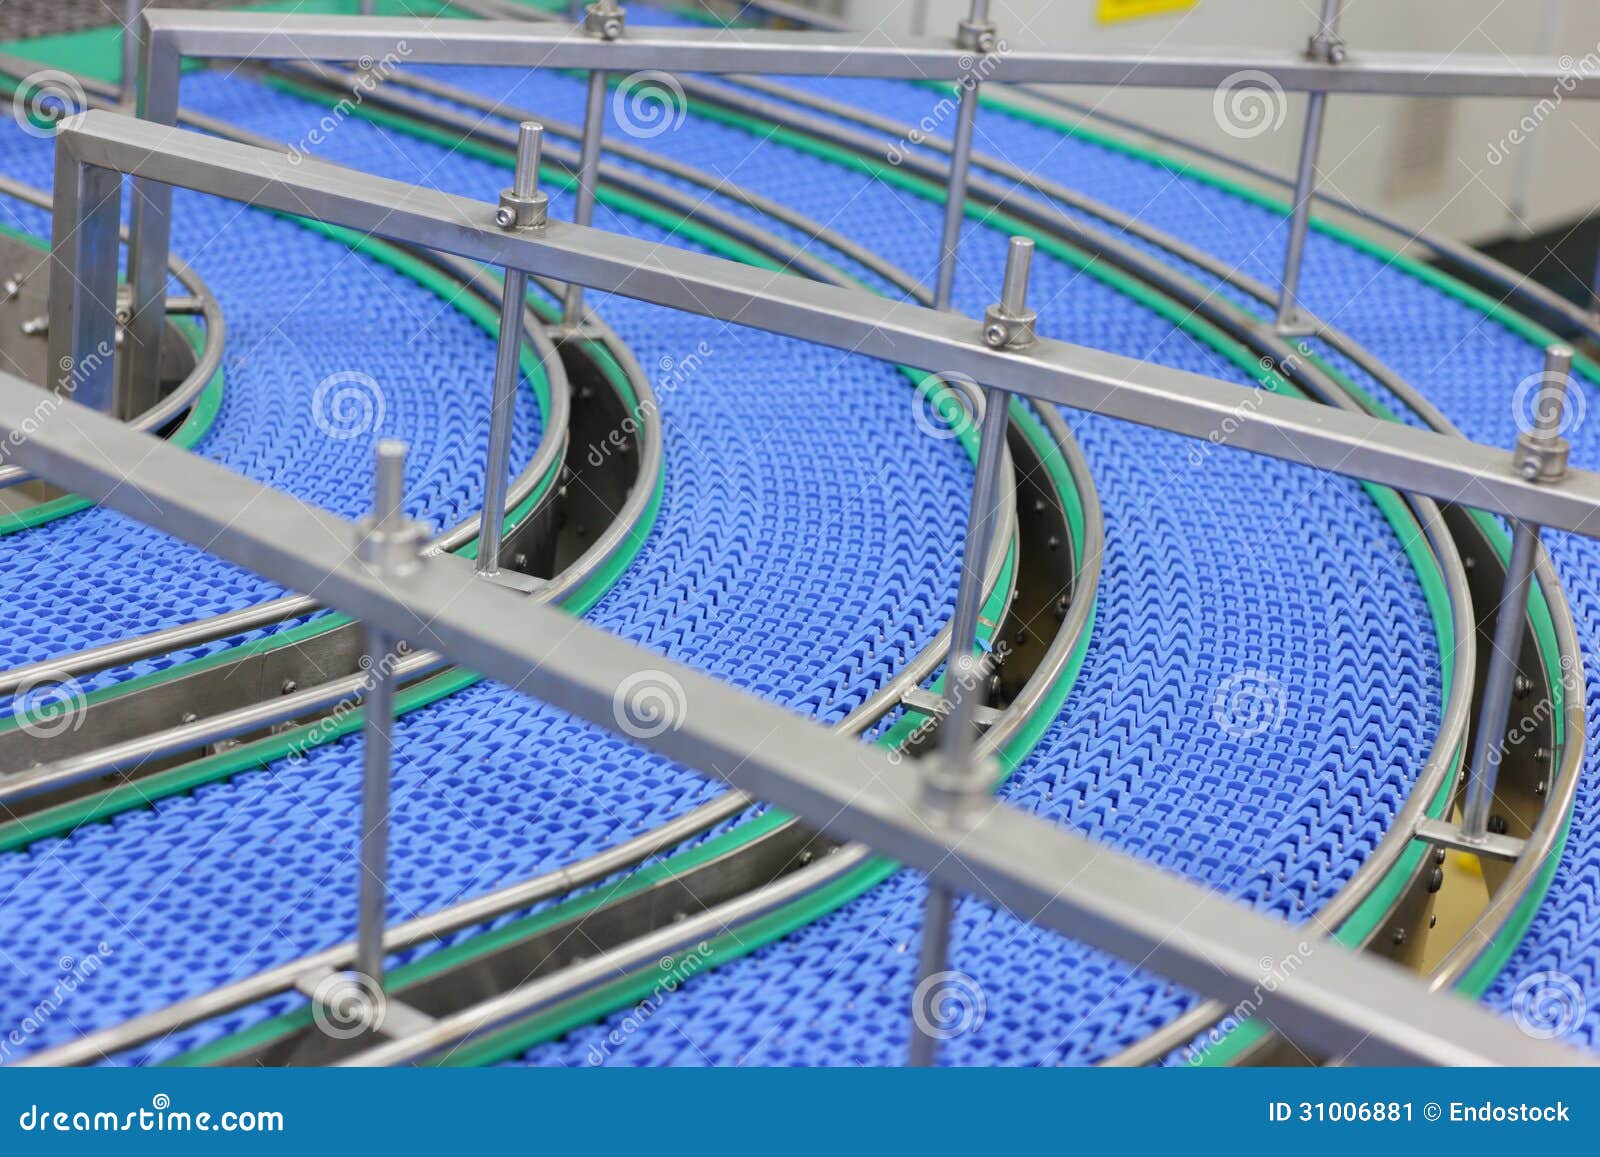 empty conveyor belt